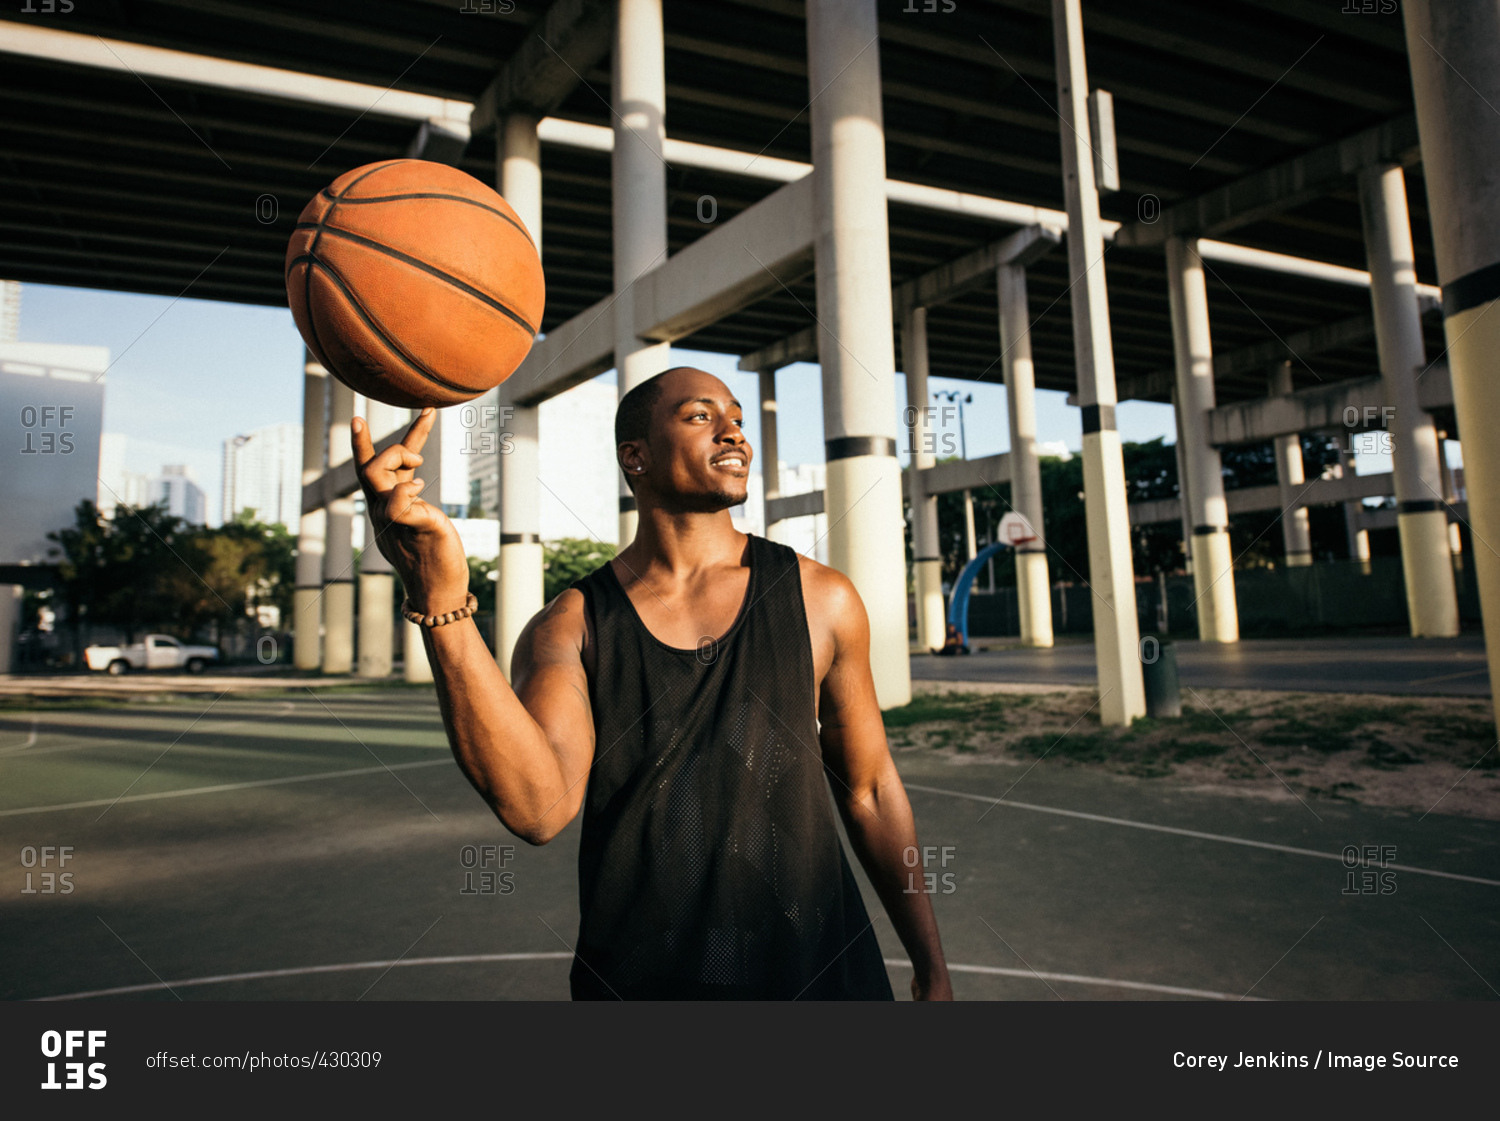 Man on basketball court balancing basketball on finger looking away